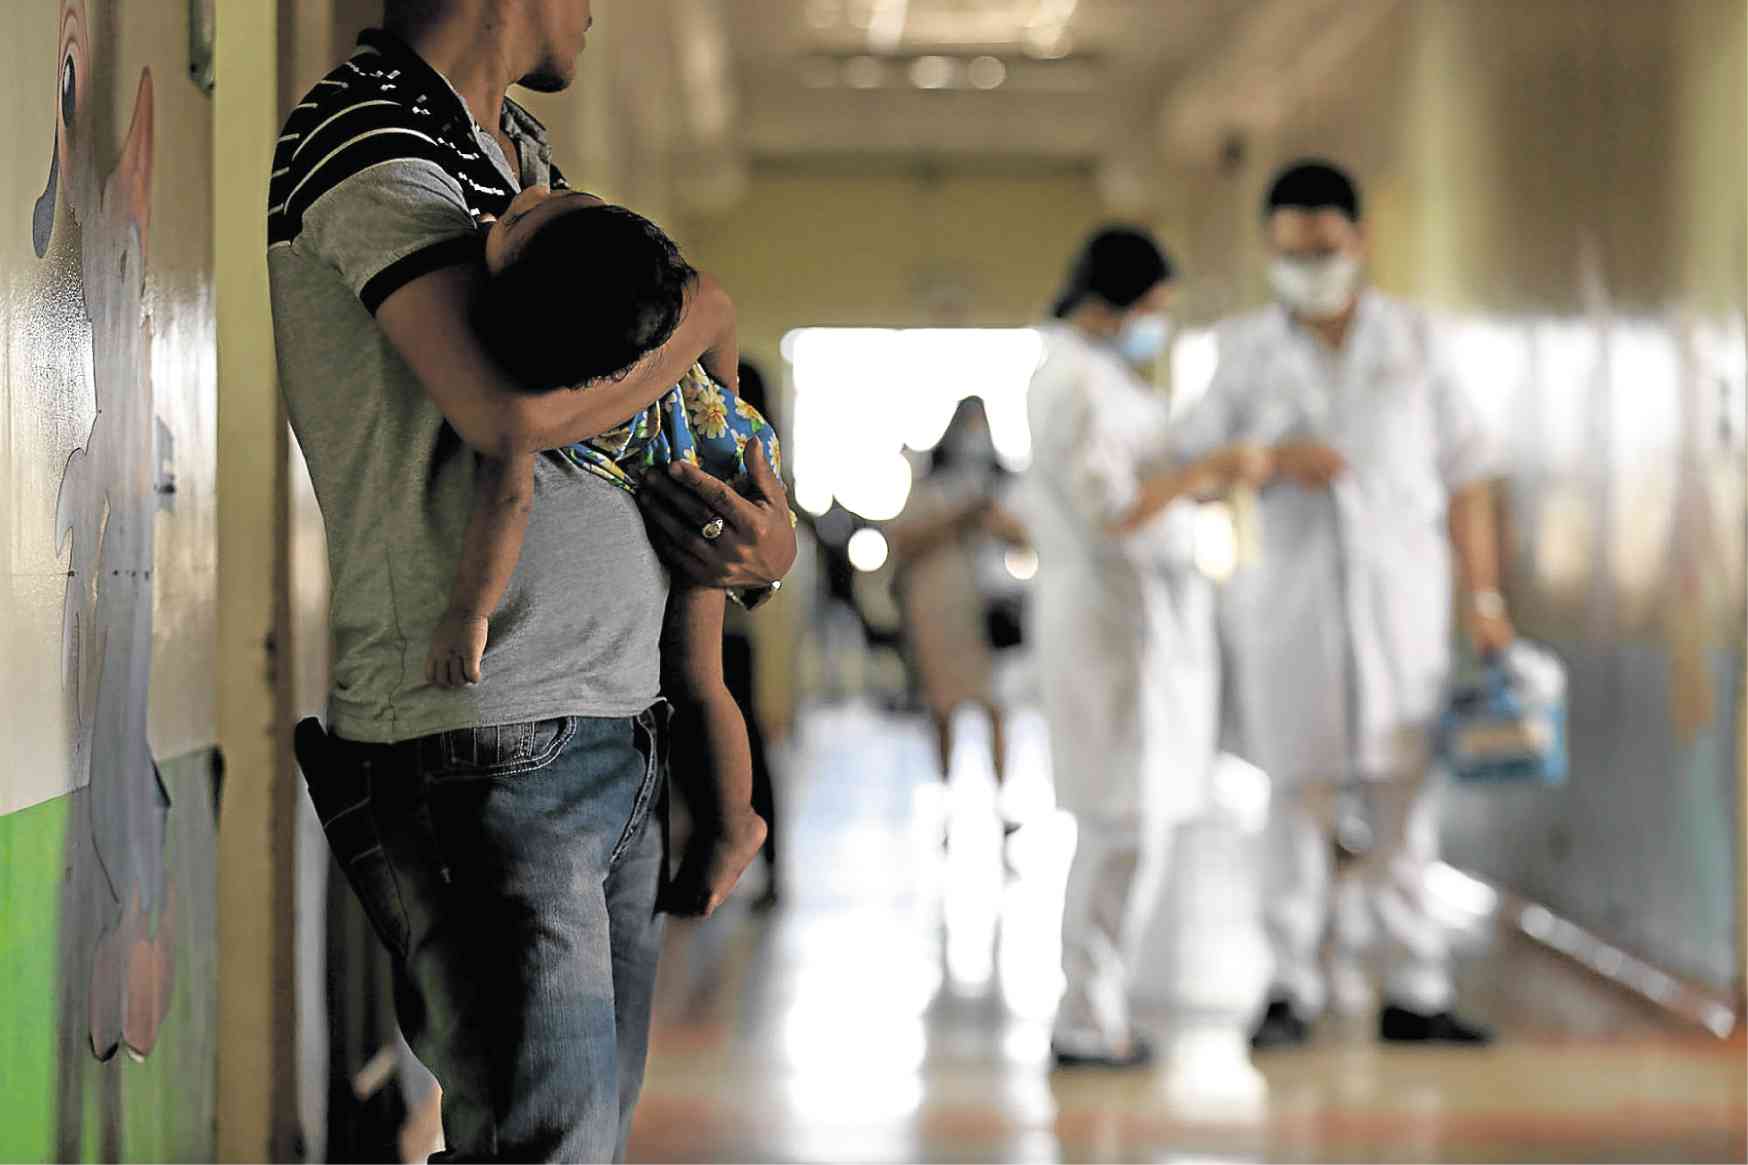 DOH pushes for compulsory vaccine shots; Malacañang shoots it down